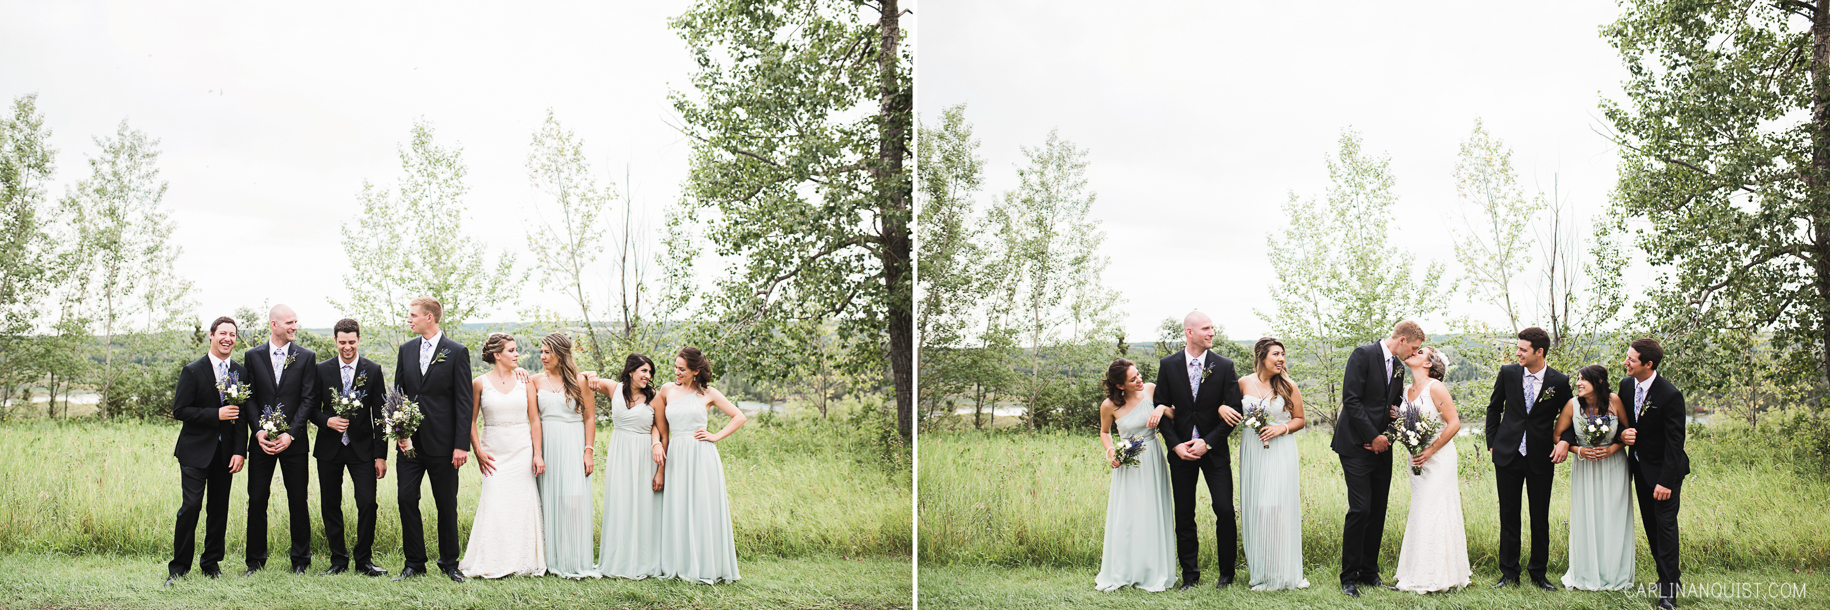 Purple & Green Wedding Party | Calgary Wedding Photographer